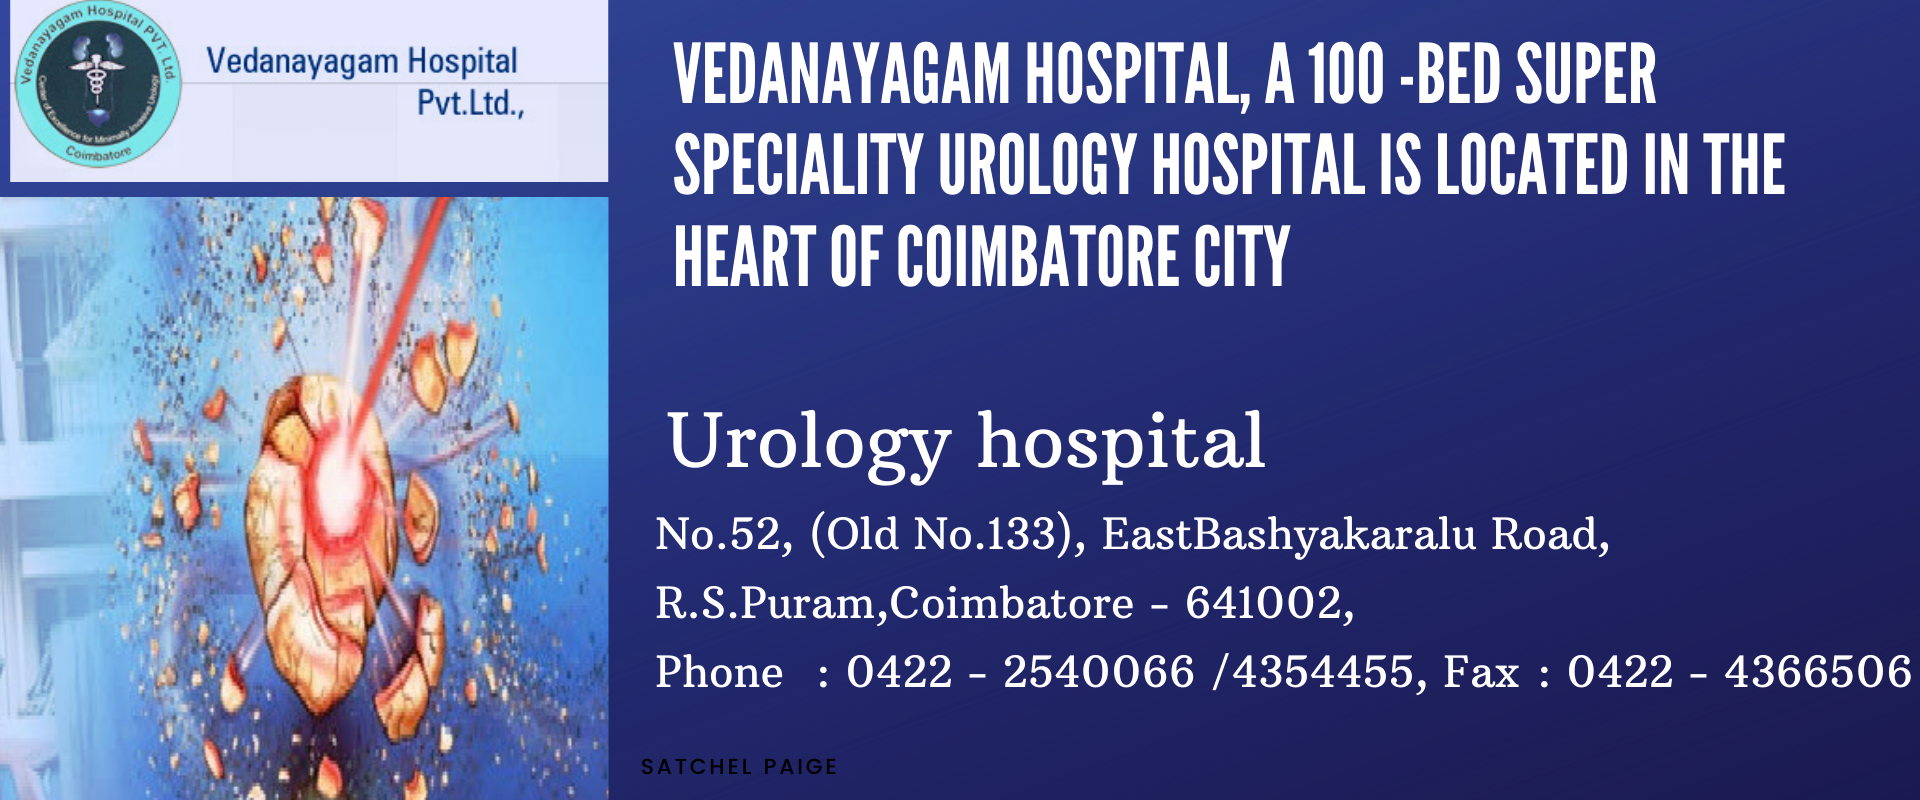 Vedanayagam hospital super speciality Urology hospital 